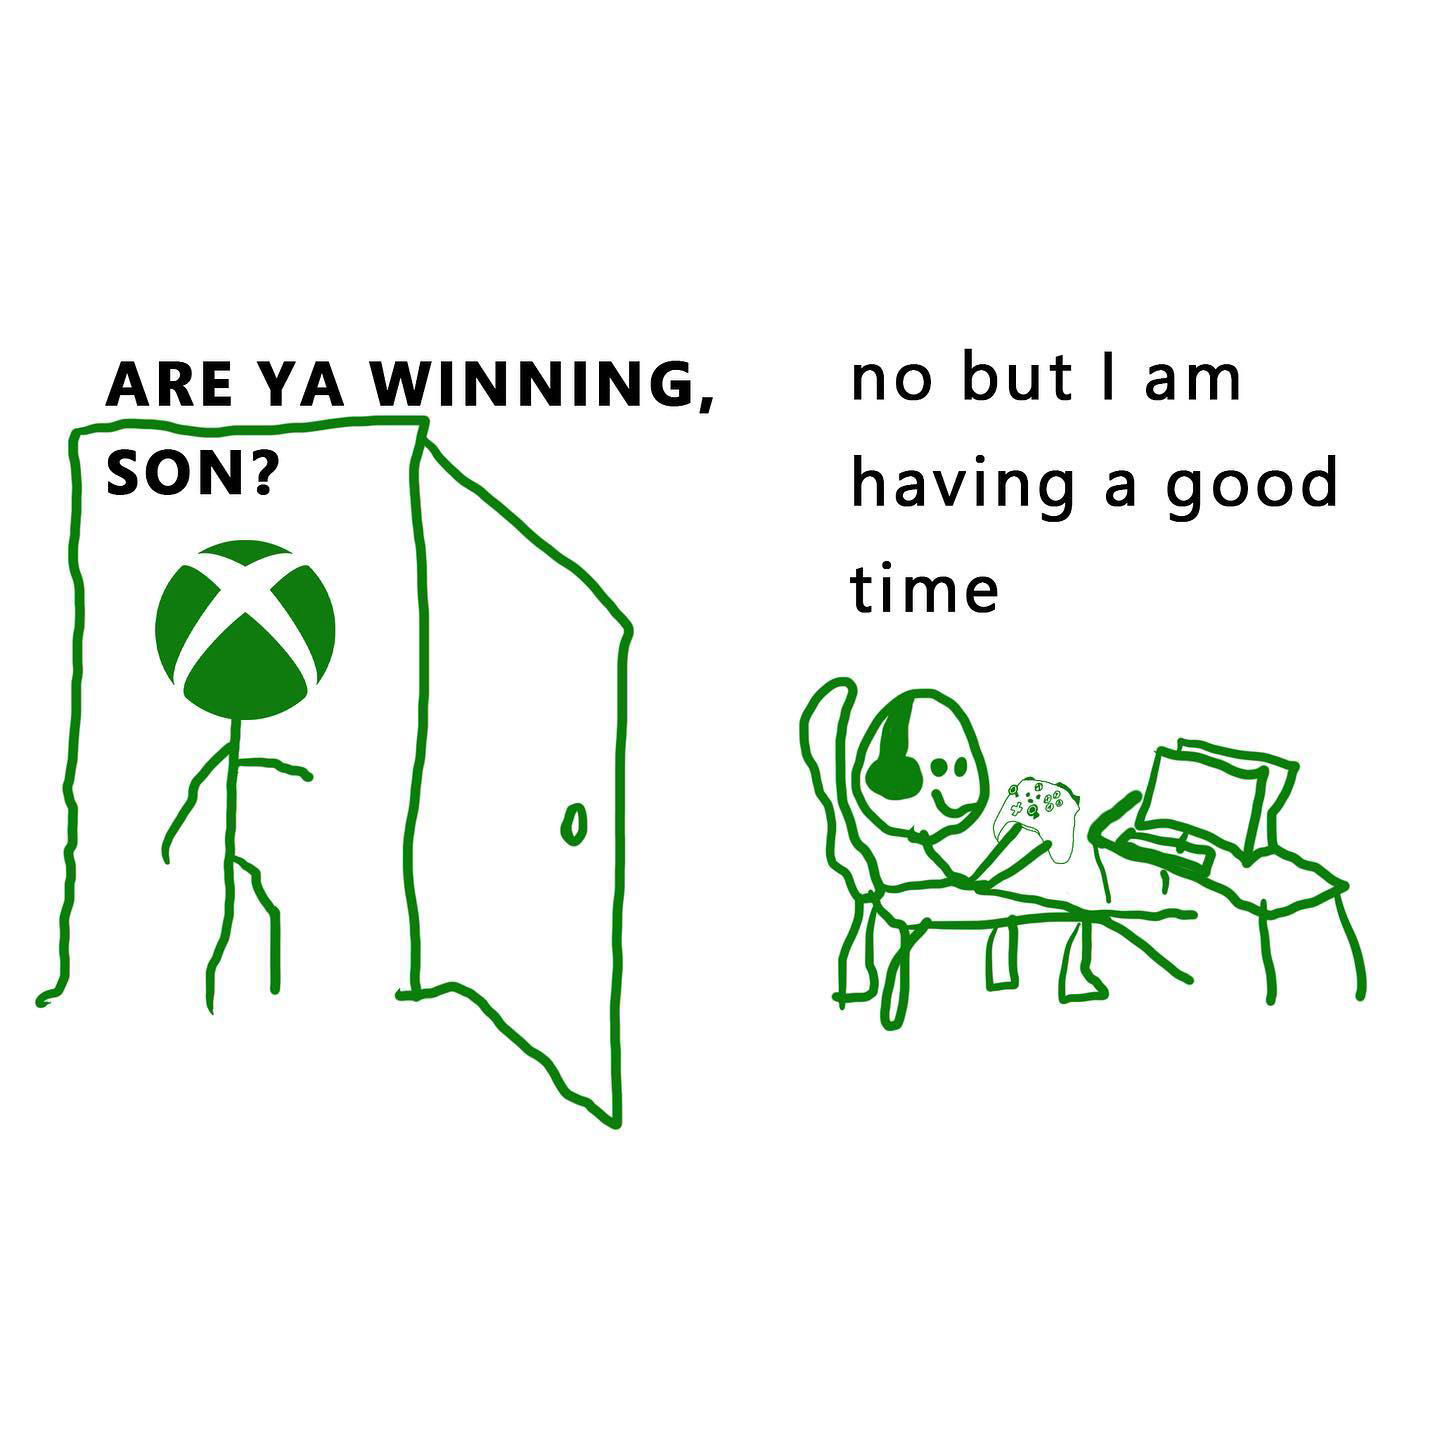 Xbox - A good time > winning​